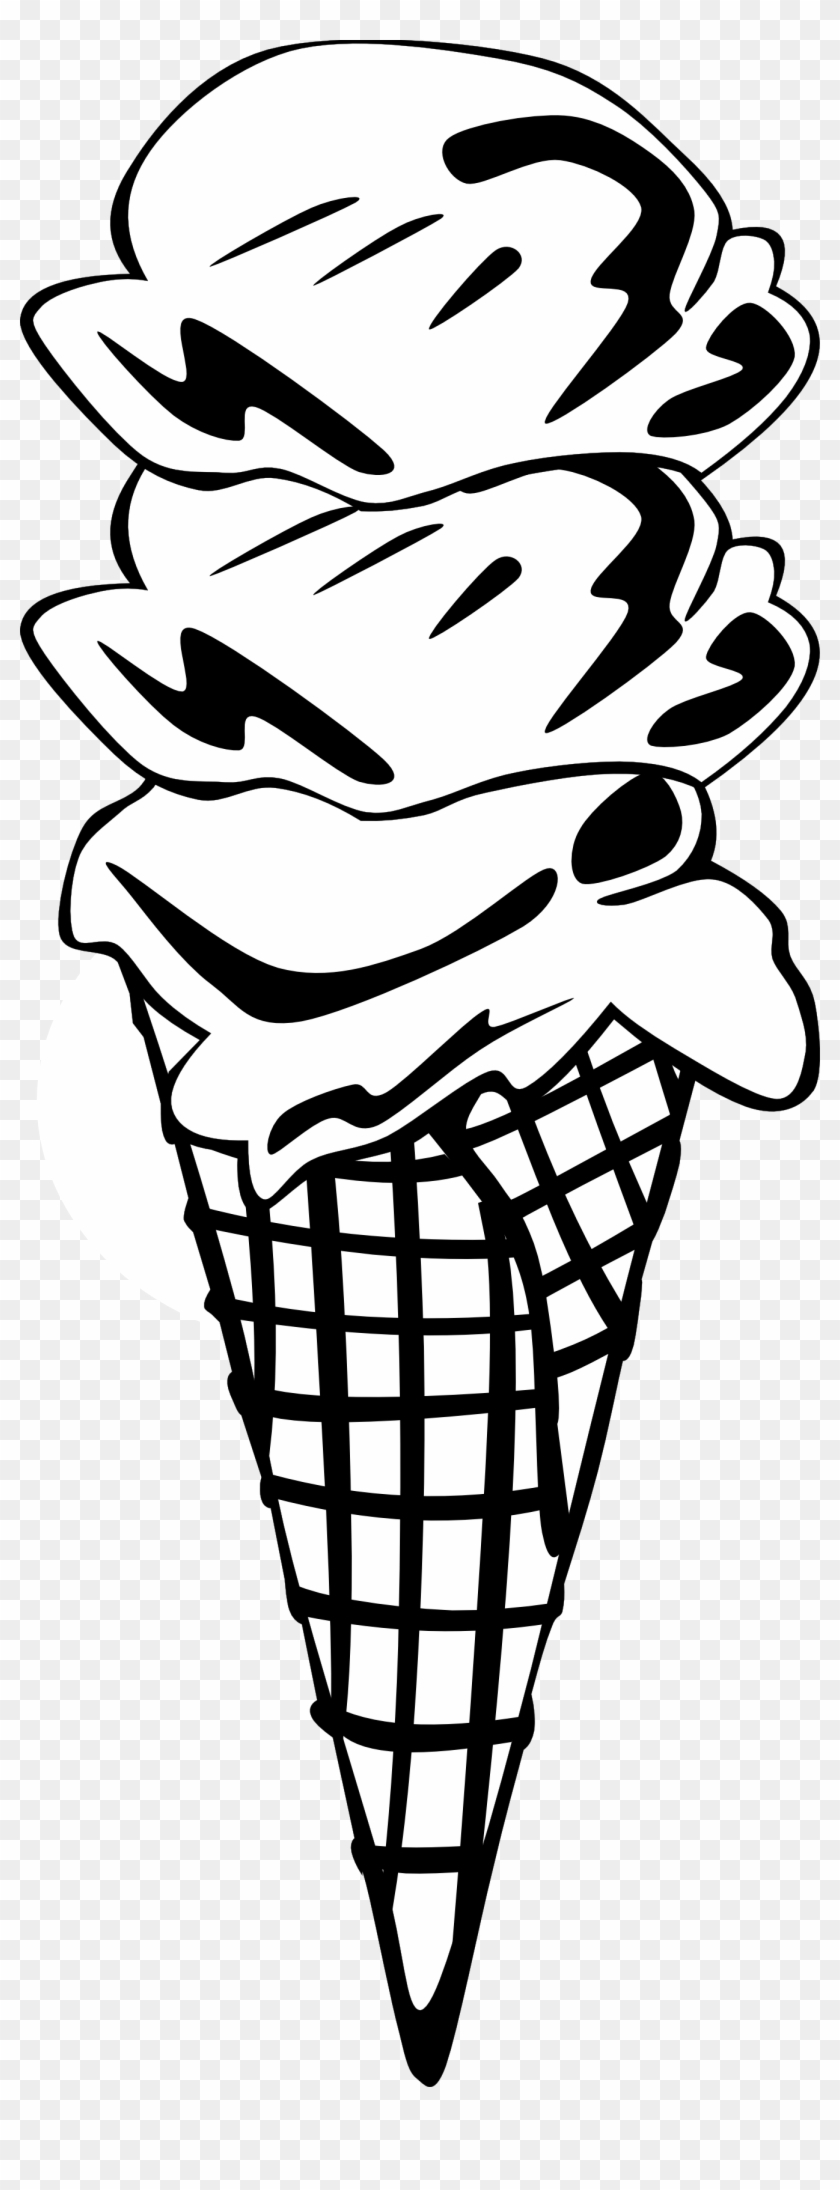 Net » Clip Art » Gerald G Ice Cream Cones Ff Menu 12 - Ice Cream Cone Clip Art #173132